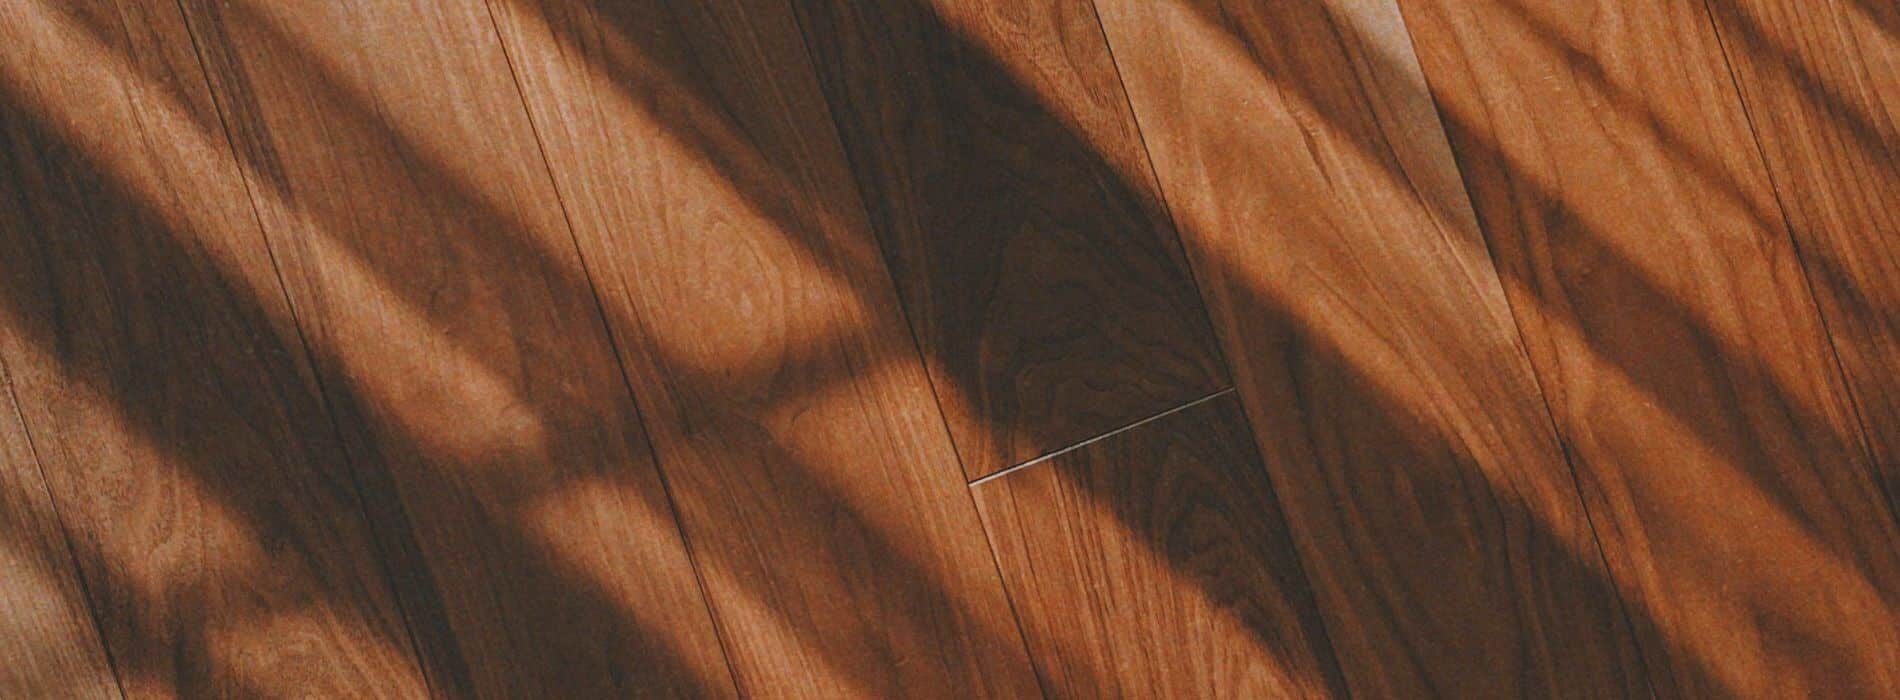  A close up of a wood grain texture.